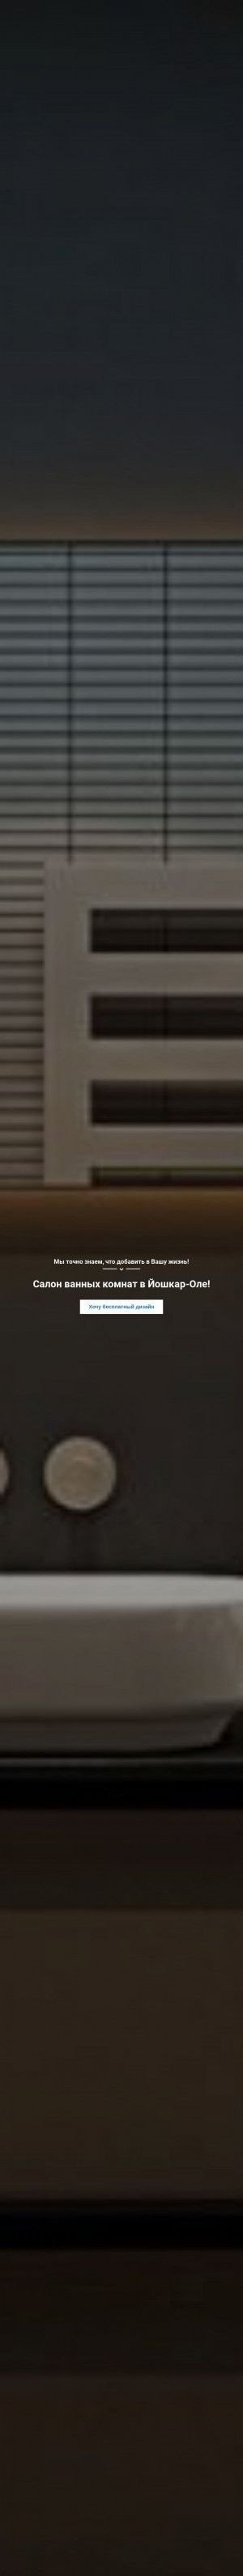 Предпросмотр для svk.stroygrad12.ru — Салон ванных комнат